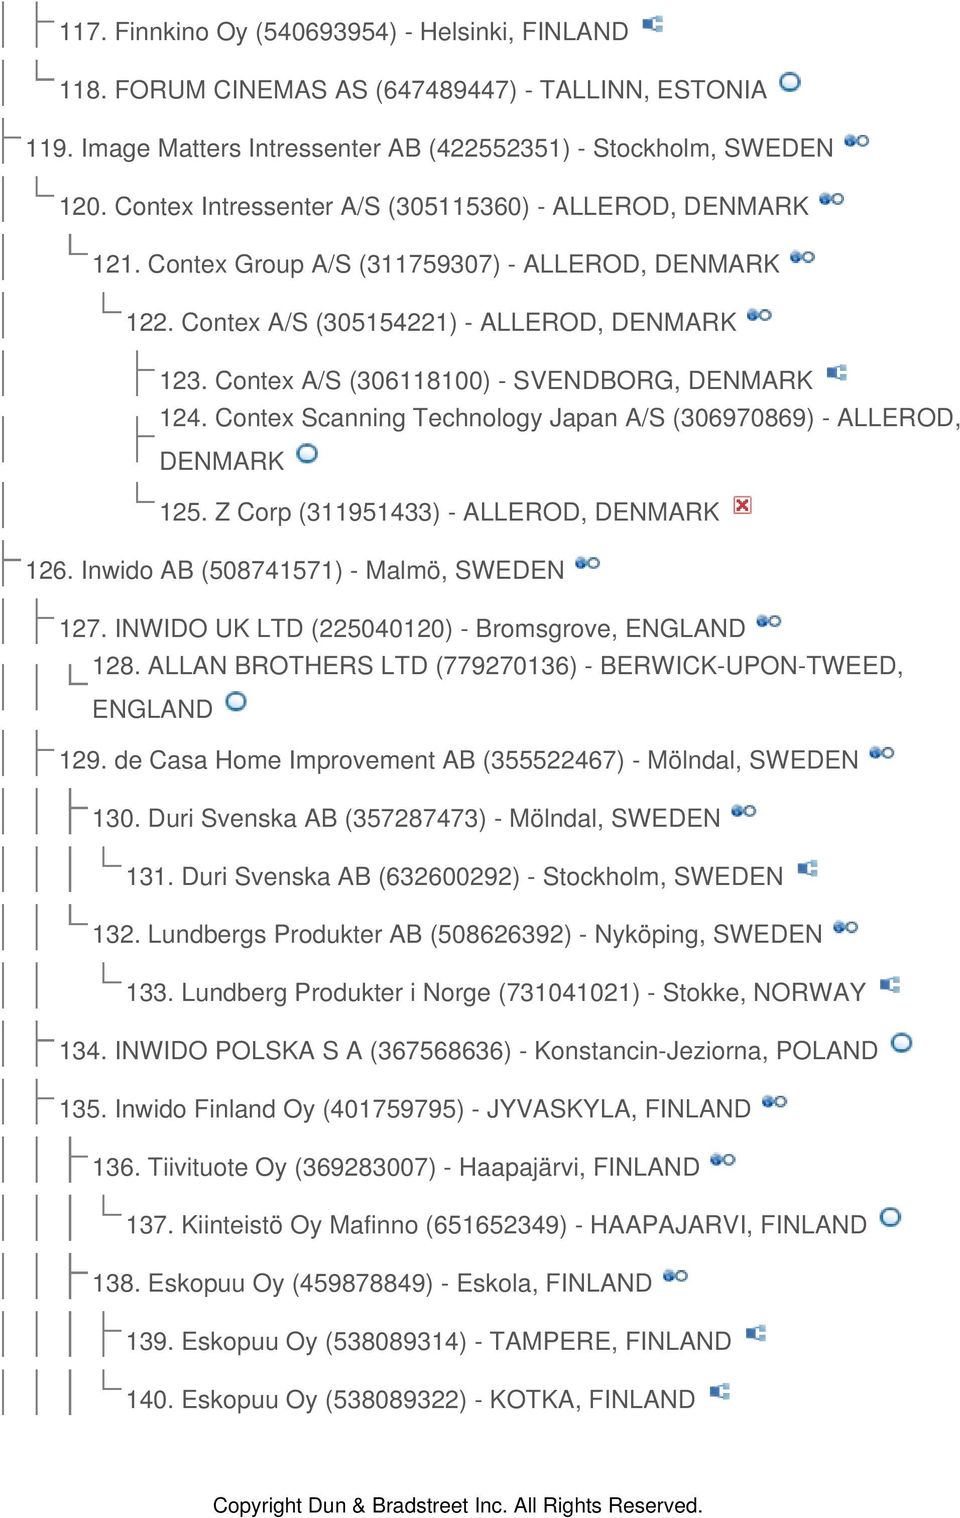 Contex A/S (306118100) - SVENDBORG, DENMARK 124. Contex Scanning Technology Japan A/S (306970869) - ALLEROD, DENMARK 125. Z Corp (311951433) - ALLEROD, DENMARK 126. Inwido AB (508741571) - Malmö, 127.